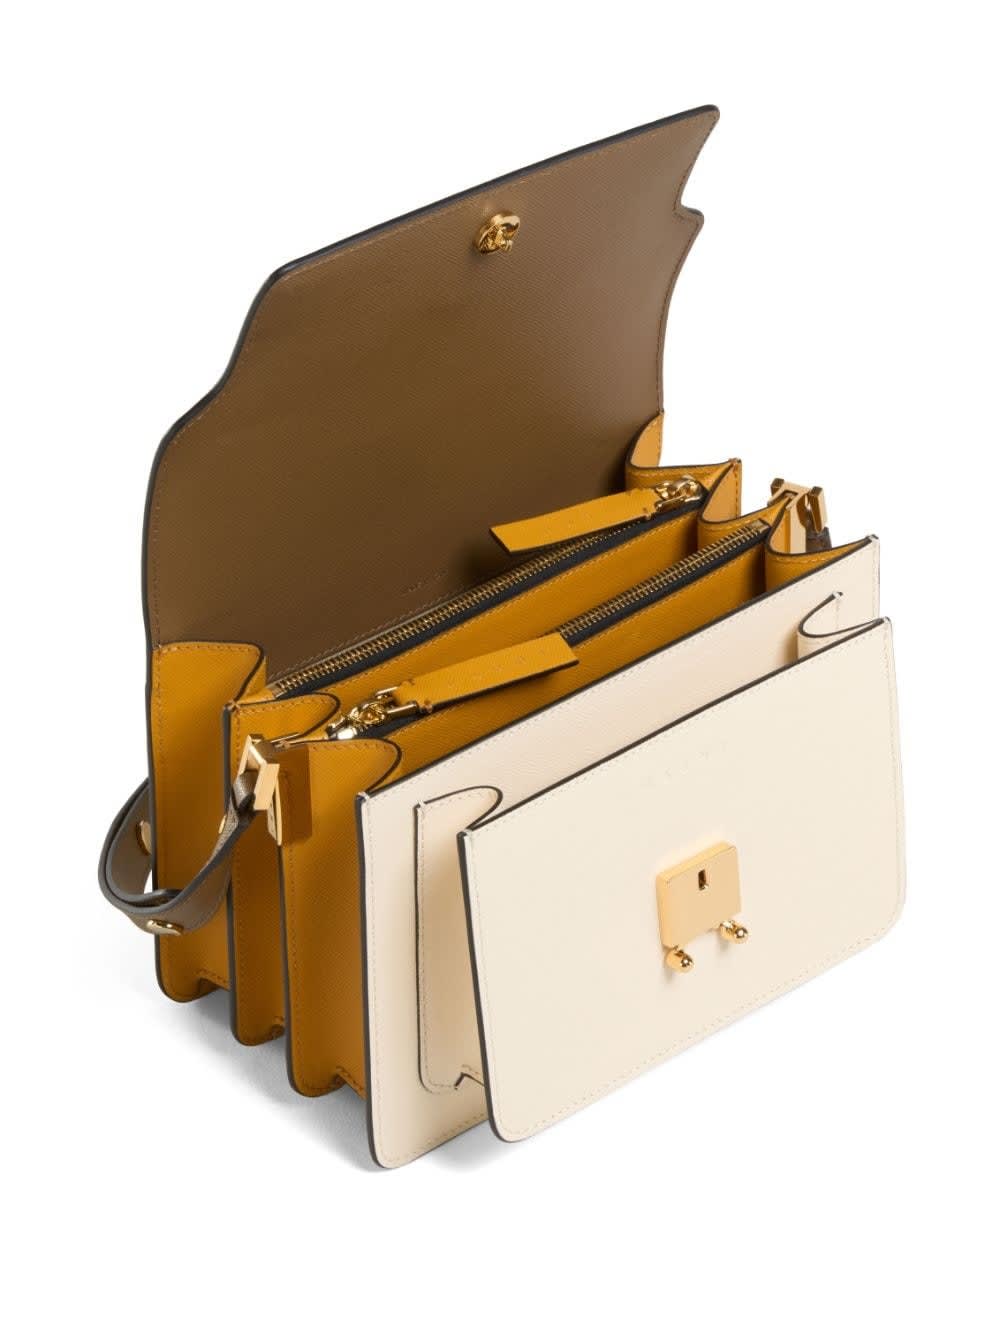 Marni Trunk Bag: A Distinctive Luxury Accessory - niood